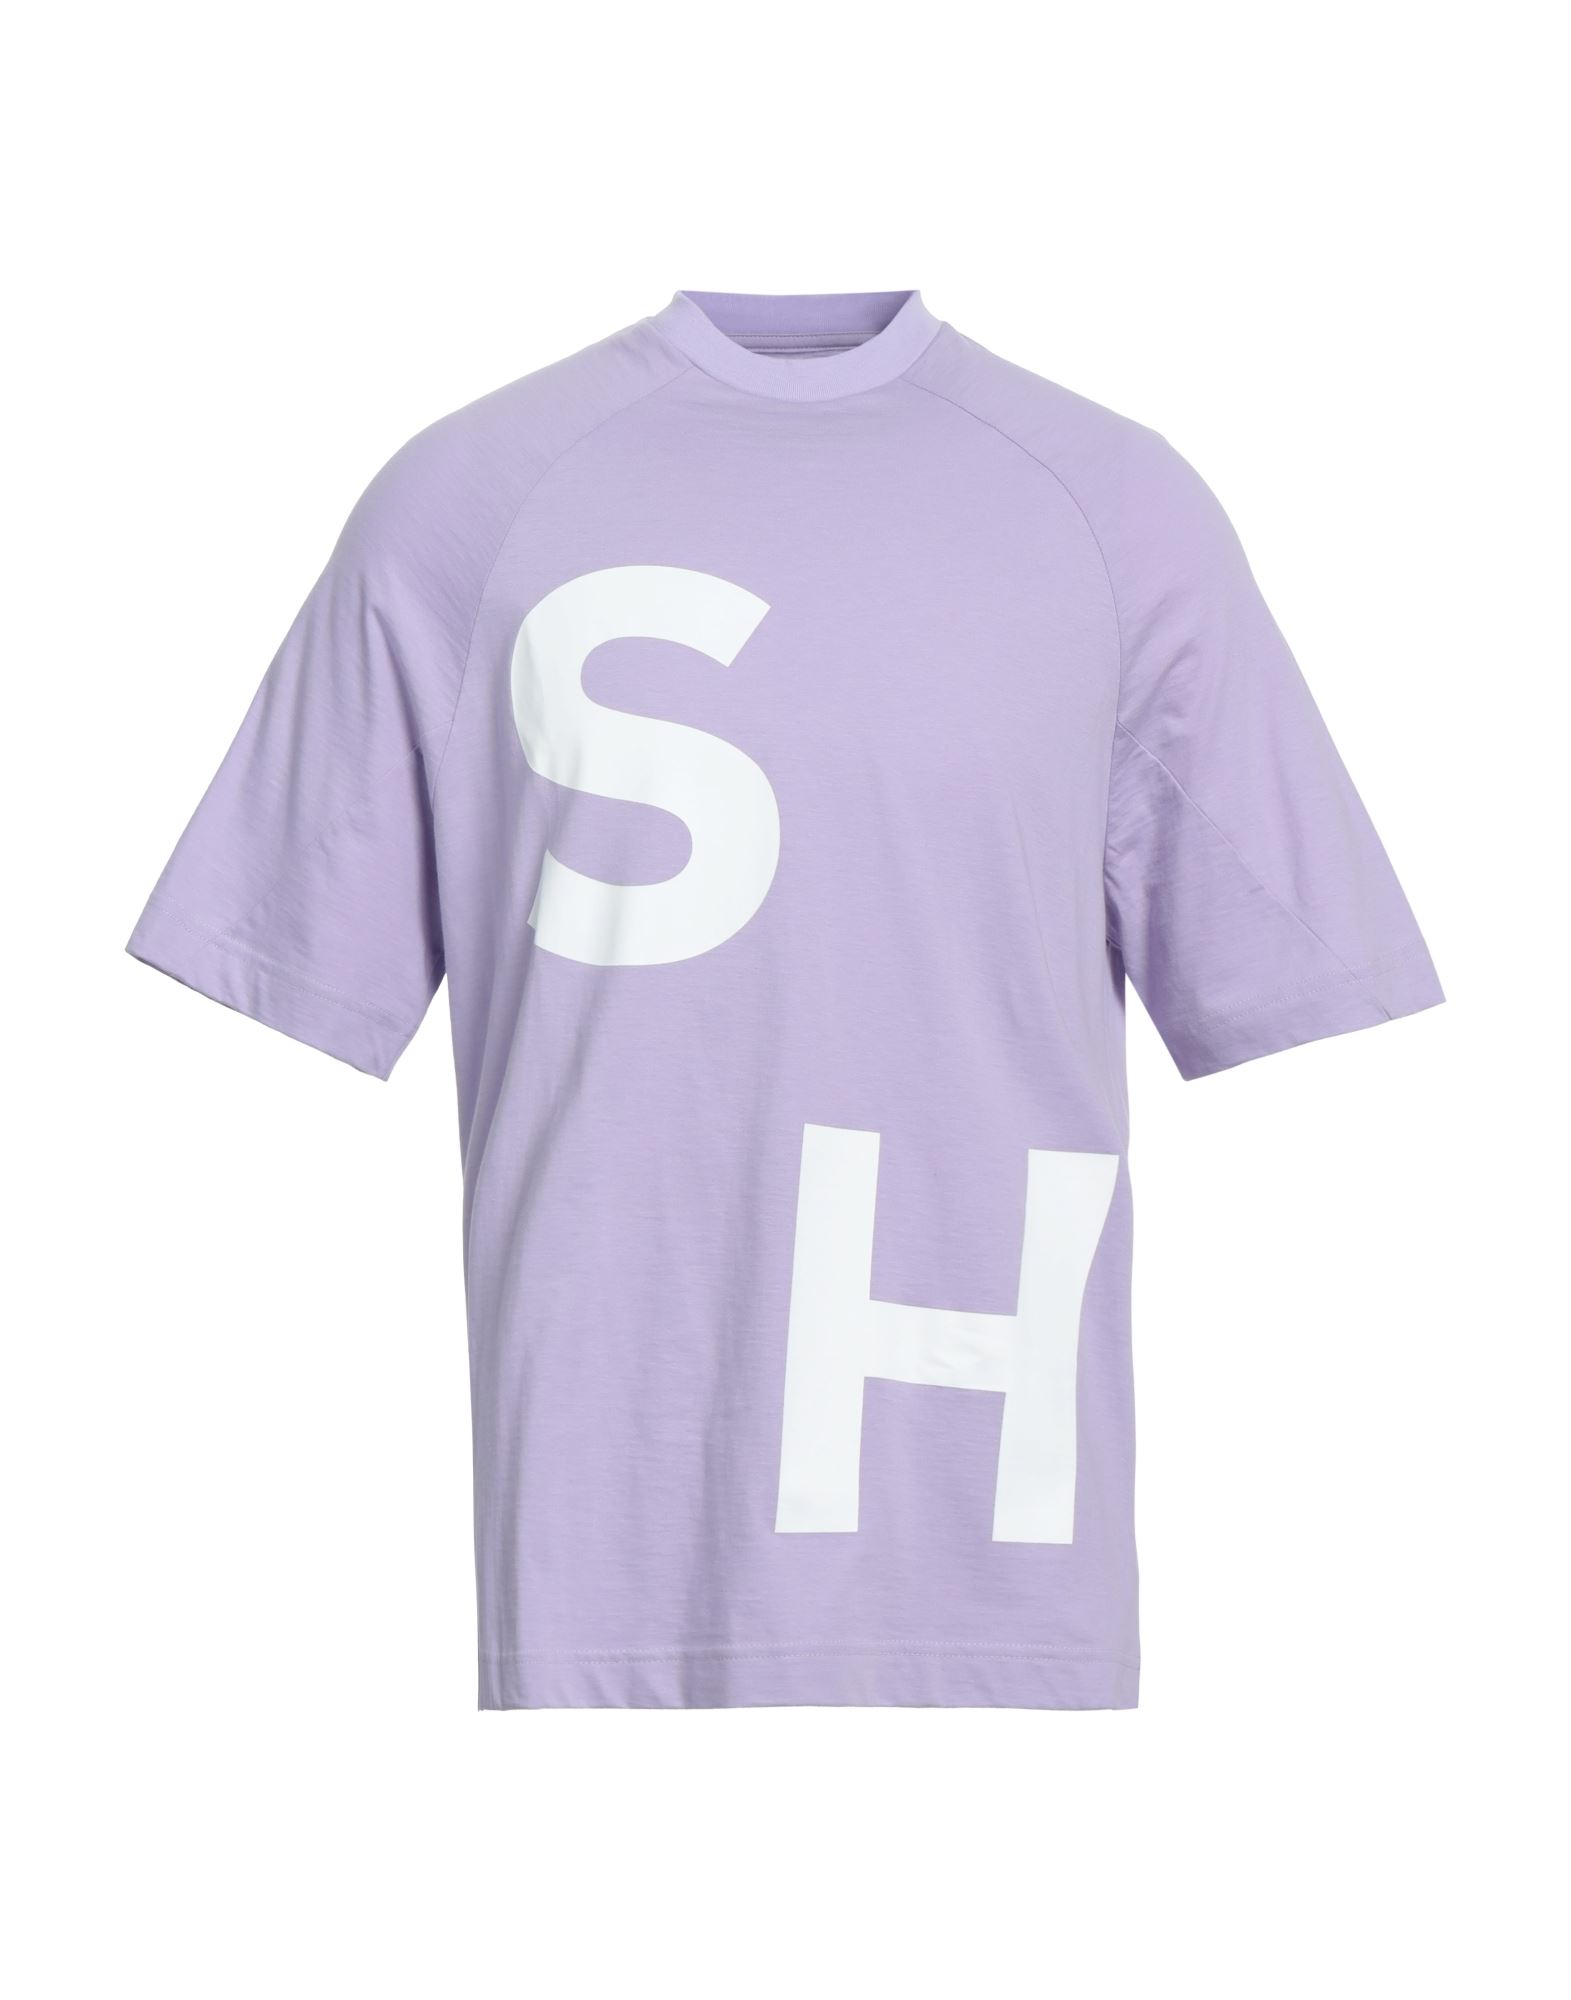 Shoe® Shoe Man T-shirt Lilac Size S Cotton In Purple